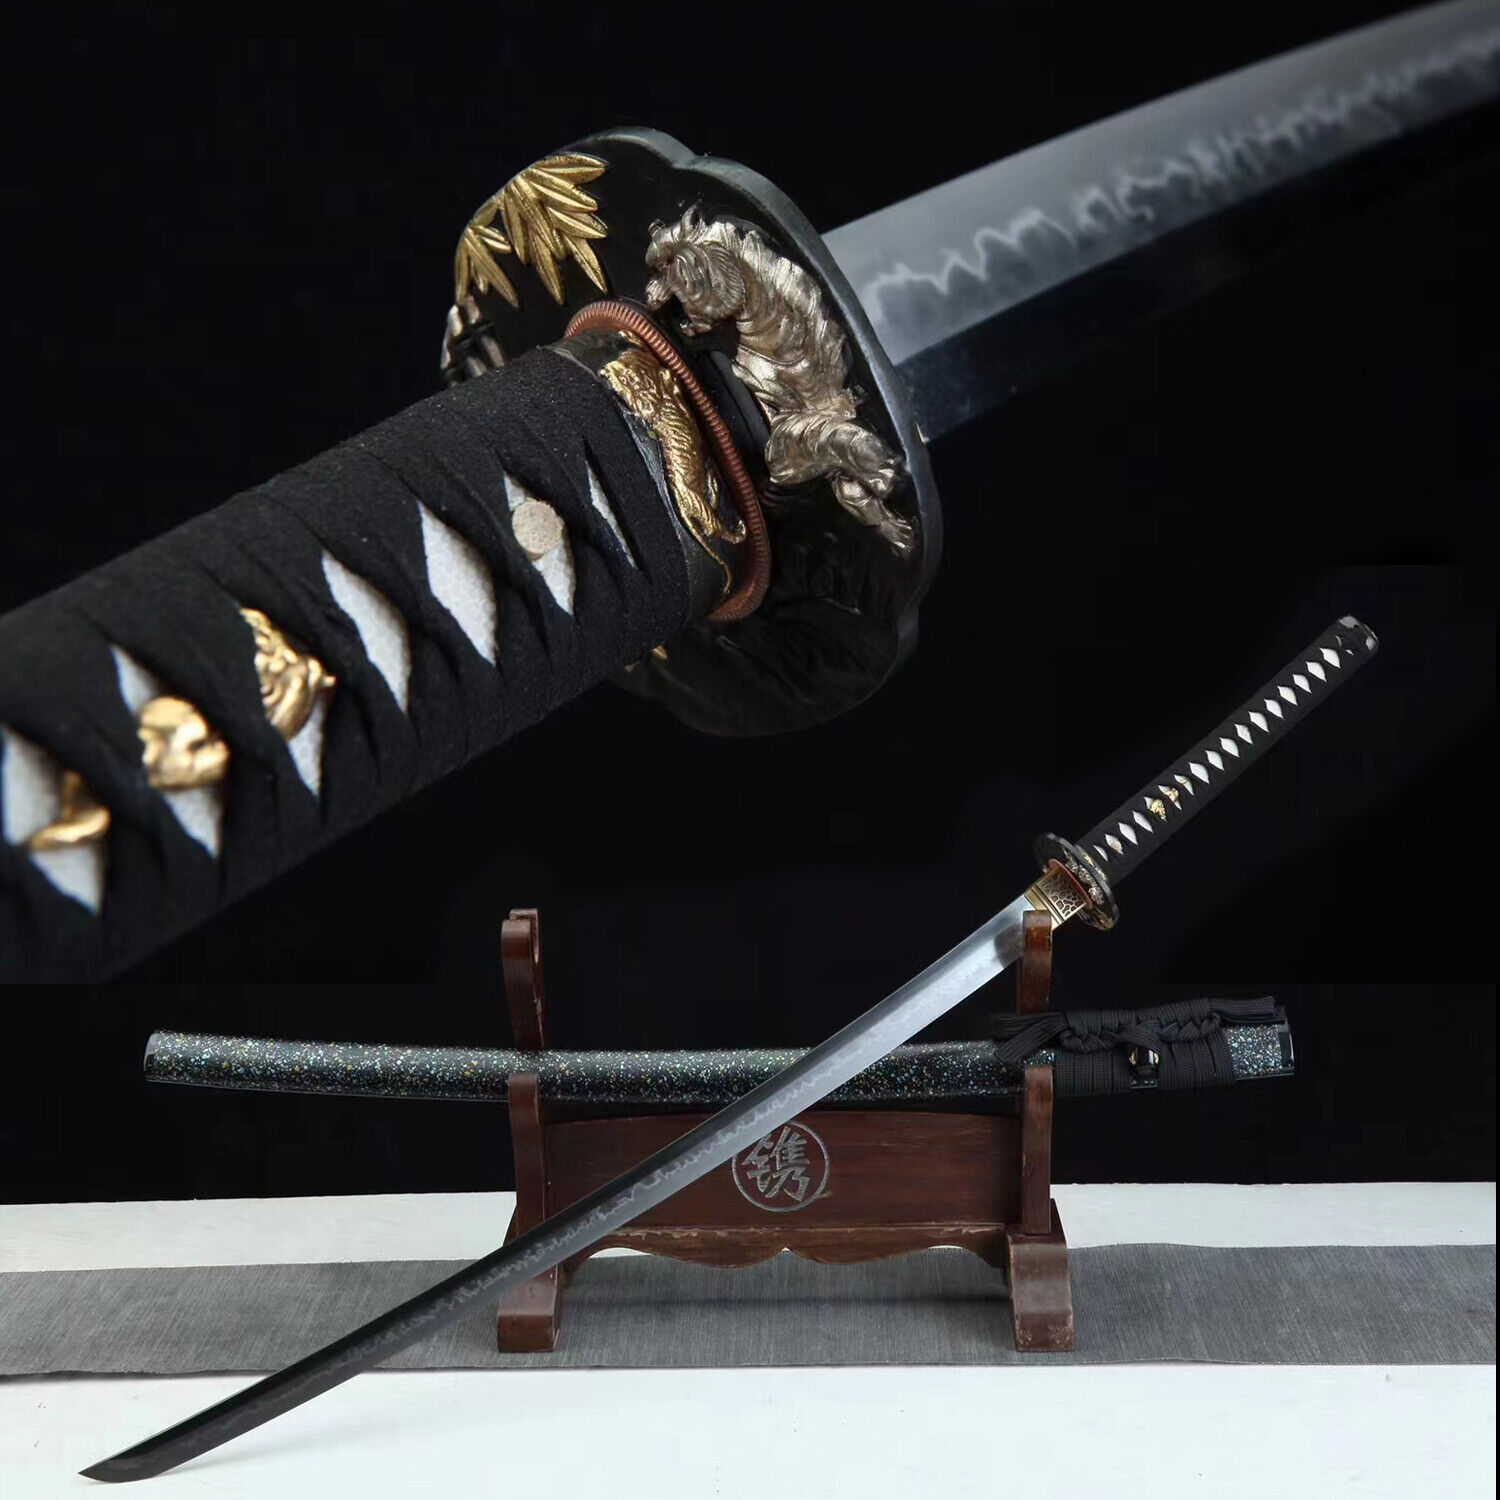 Black Clay Tempered L6 Steel Sharp Japanese Samurai Sword Katana Choji Hamon